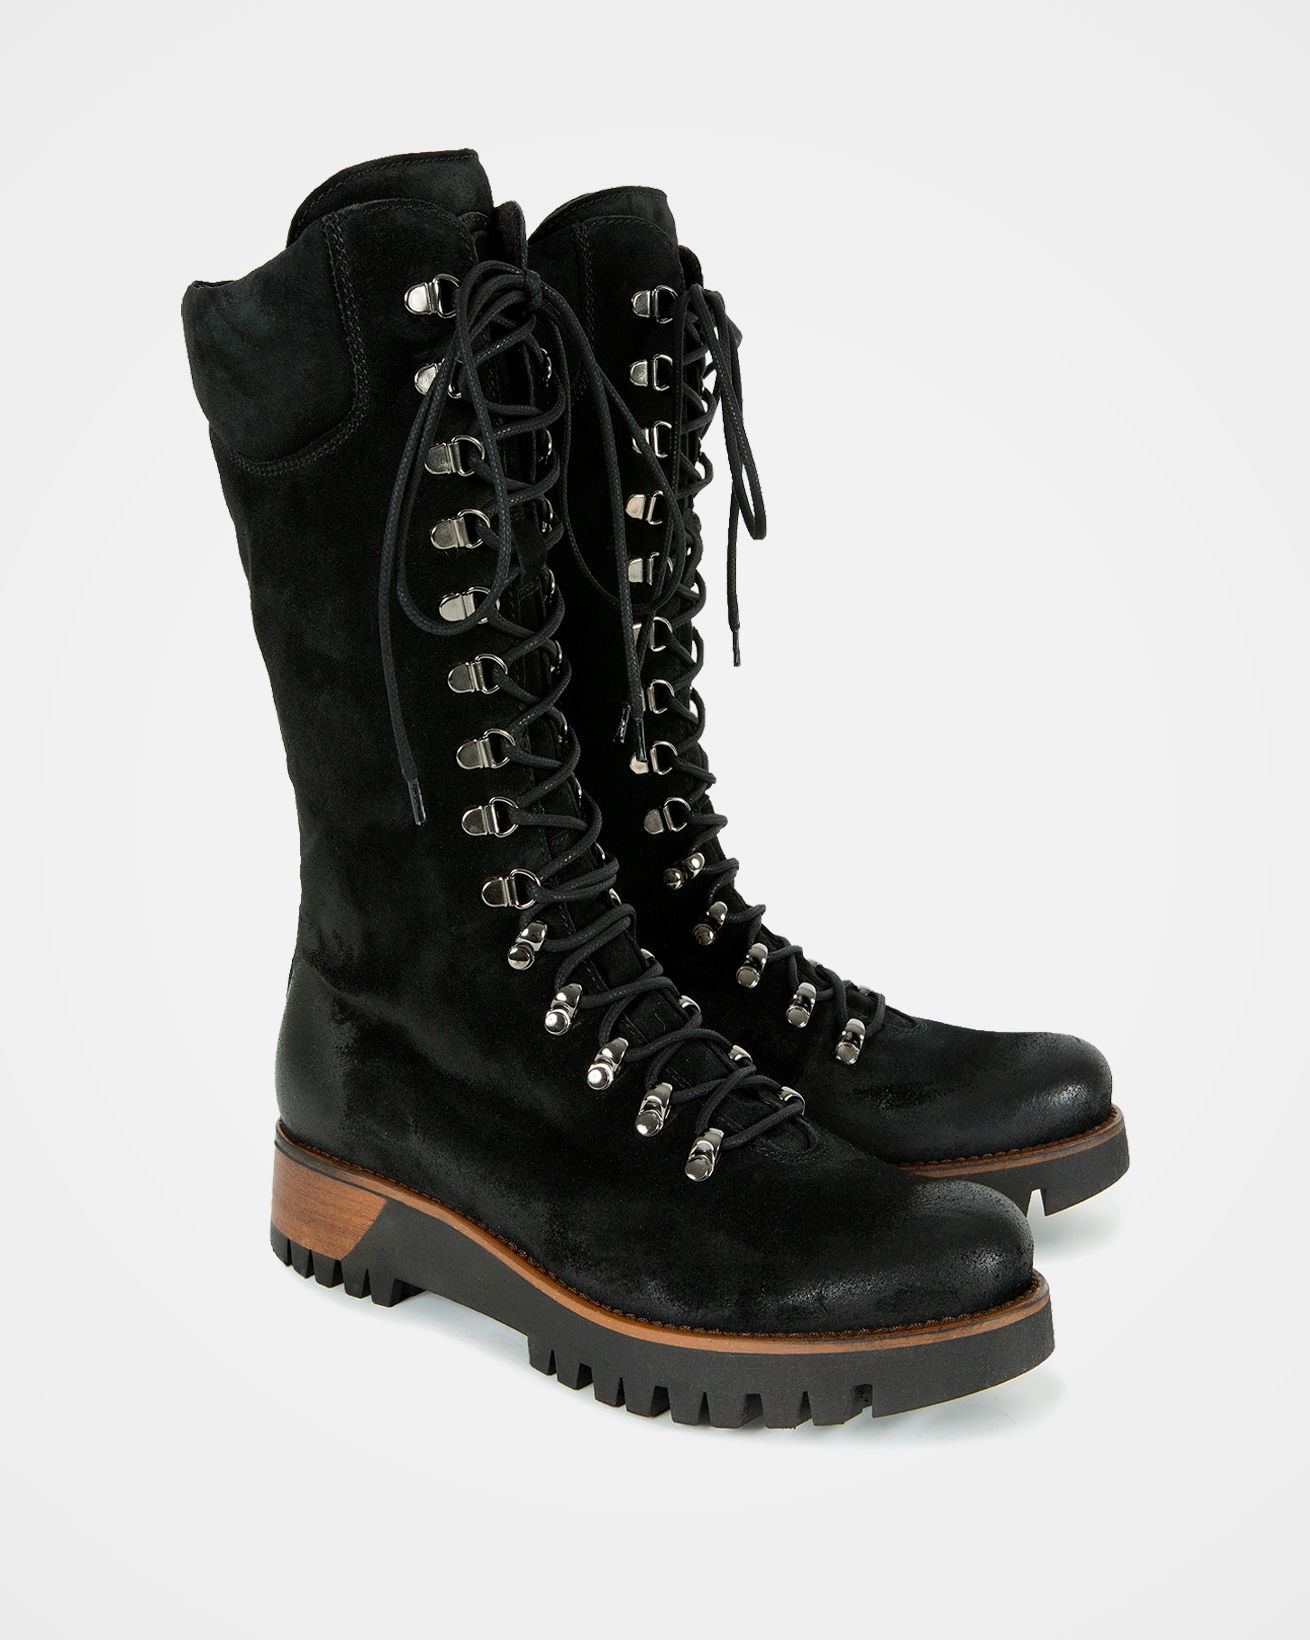 7082-wilderness-boots-black-pair-web-lfs-rev.jpg